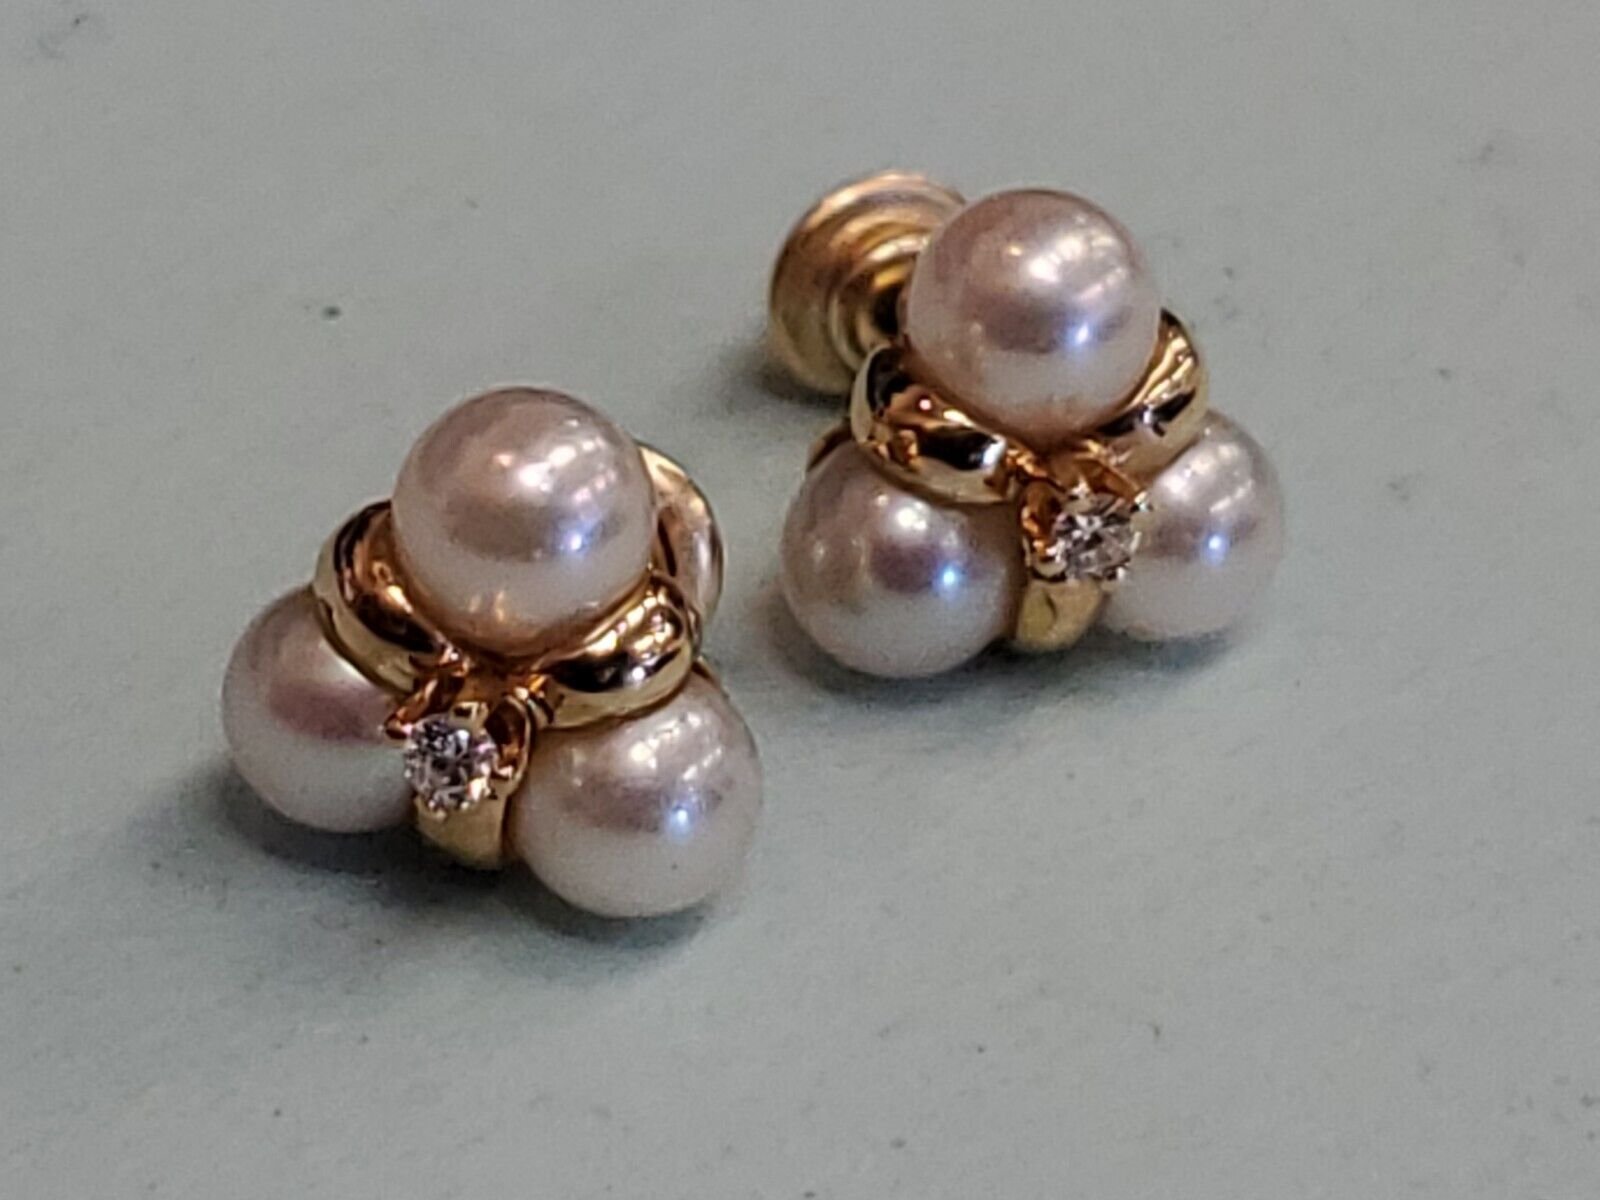  pearl earring designs